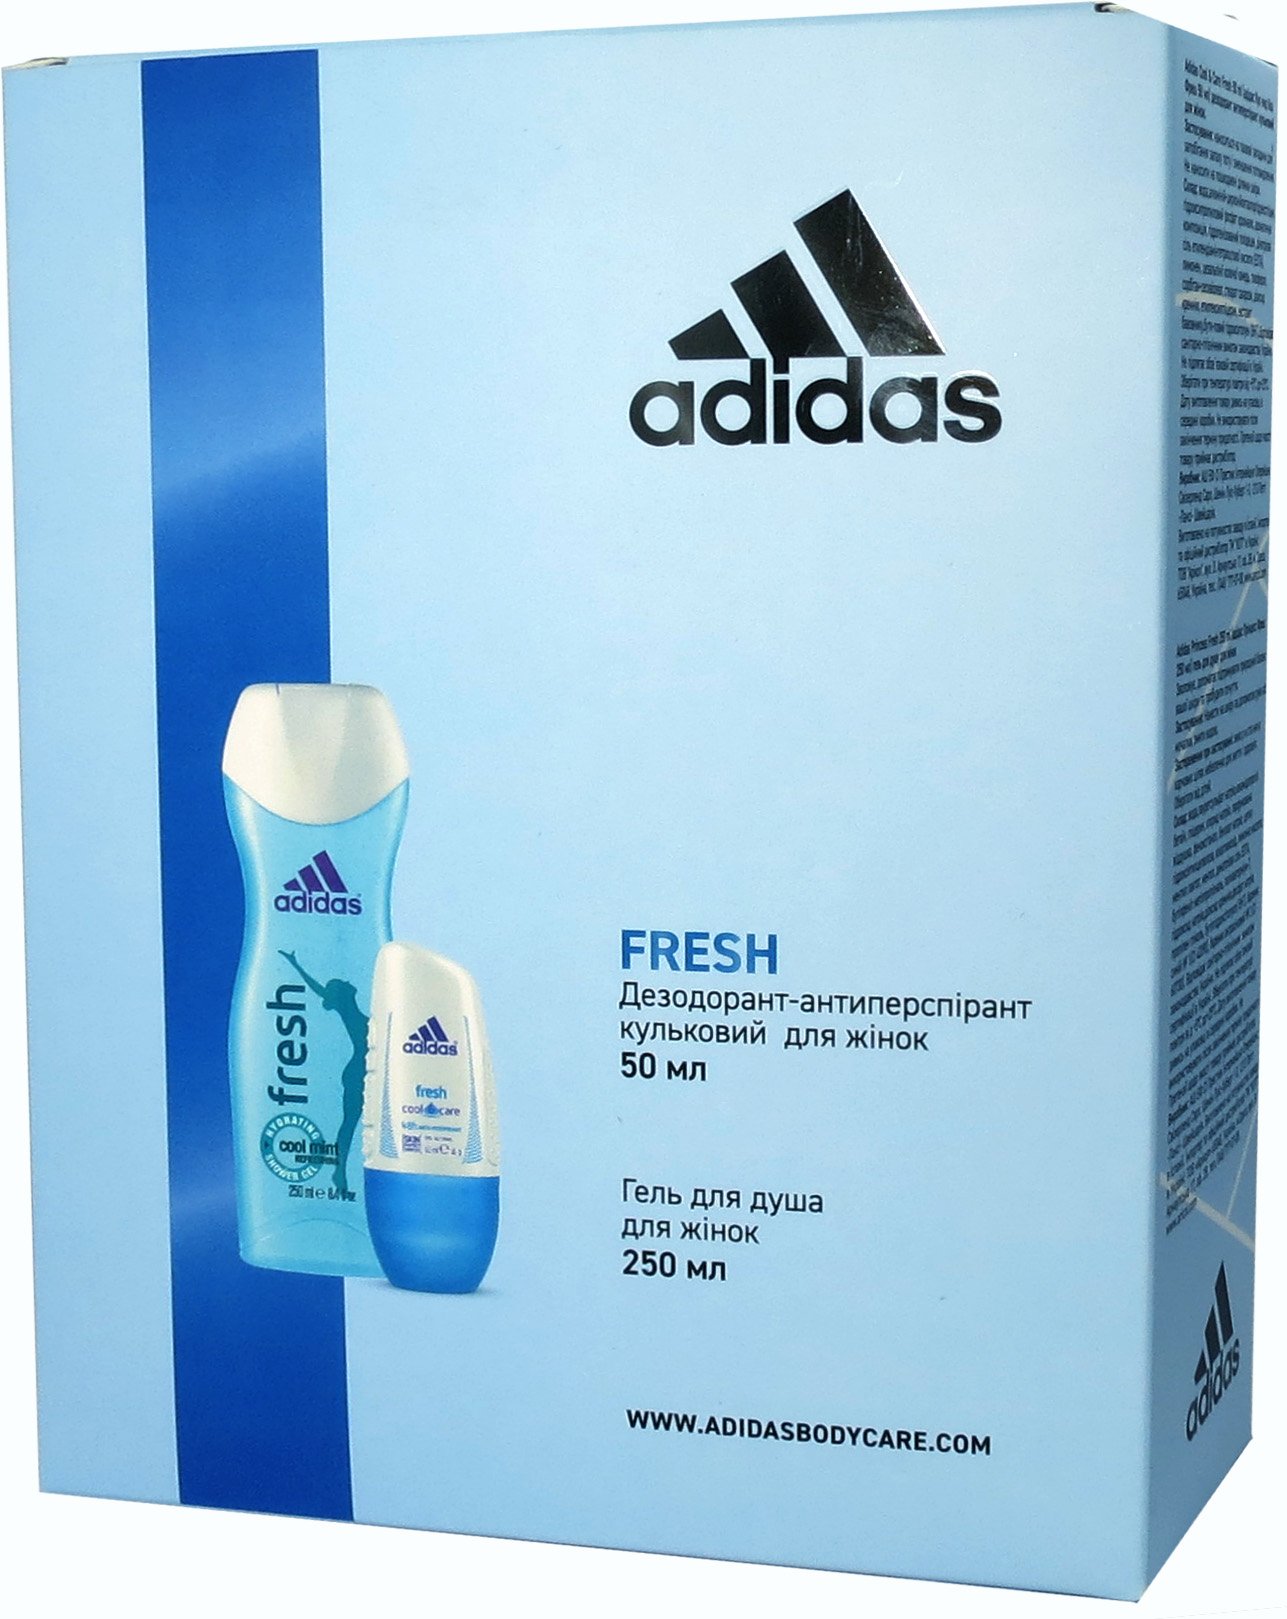 Набор для женщин Adidas 2020 Дезодорант-антиперспирант Fresh, 50 мл + Гель для душа, 250 мл - фото 1